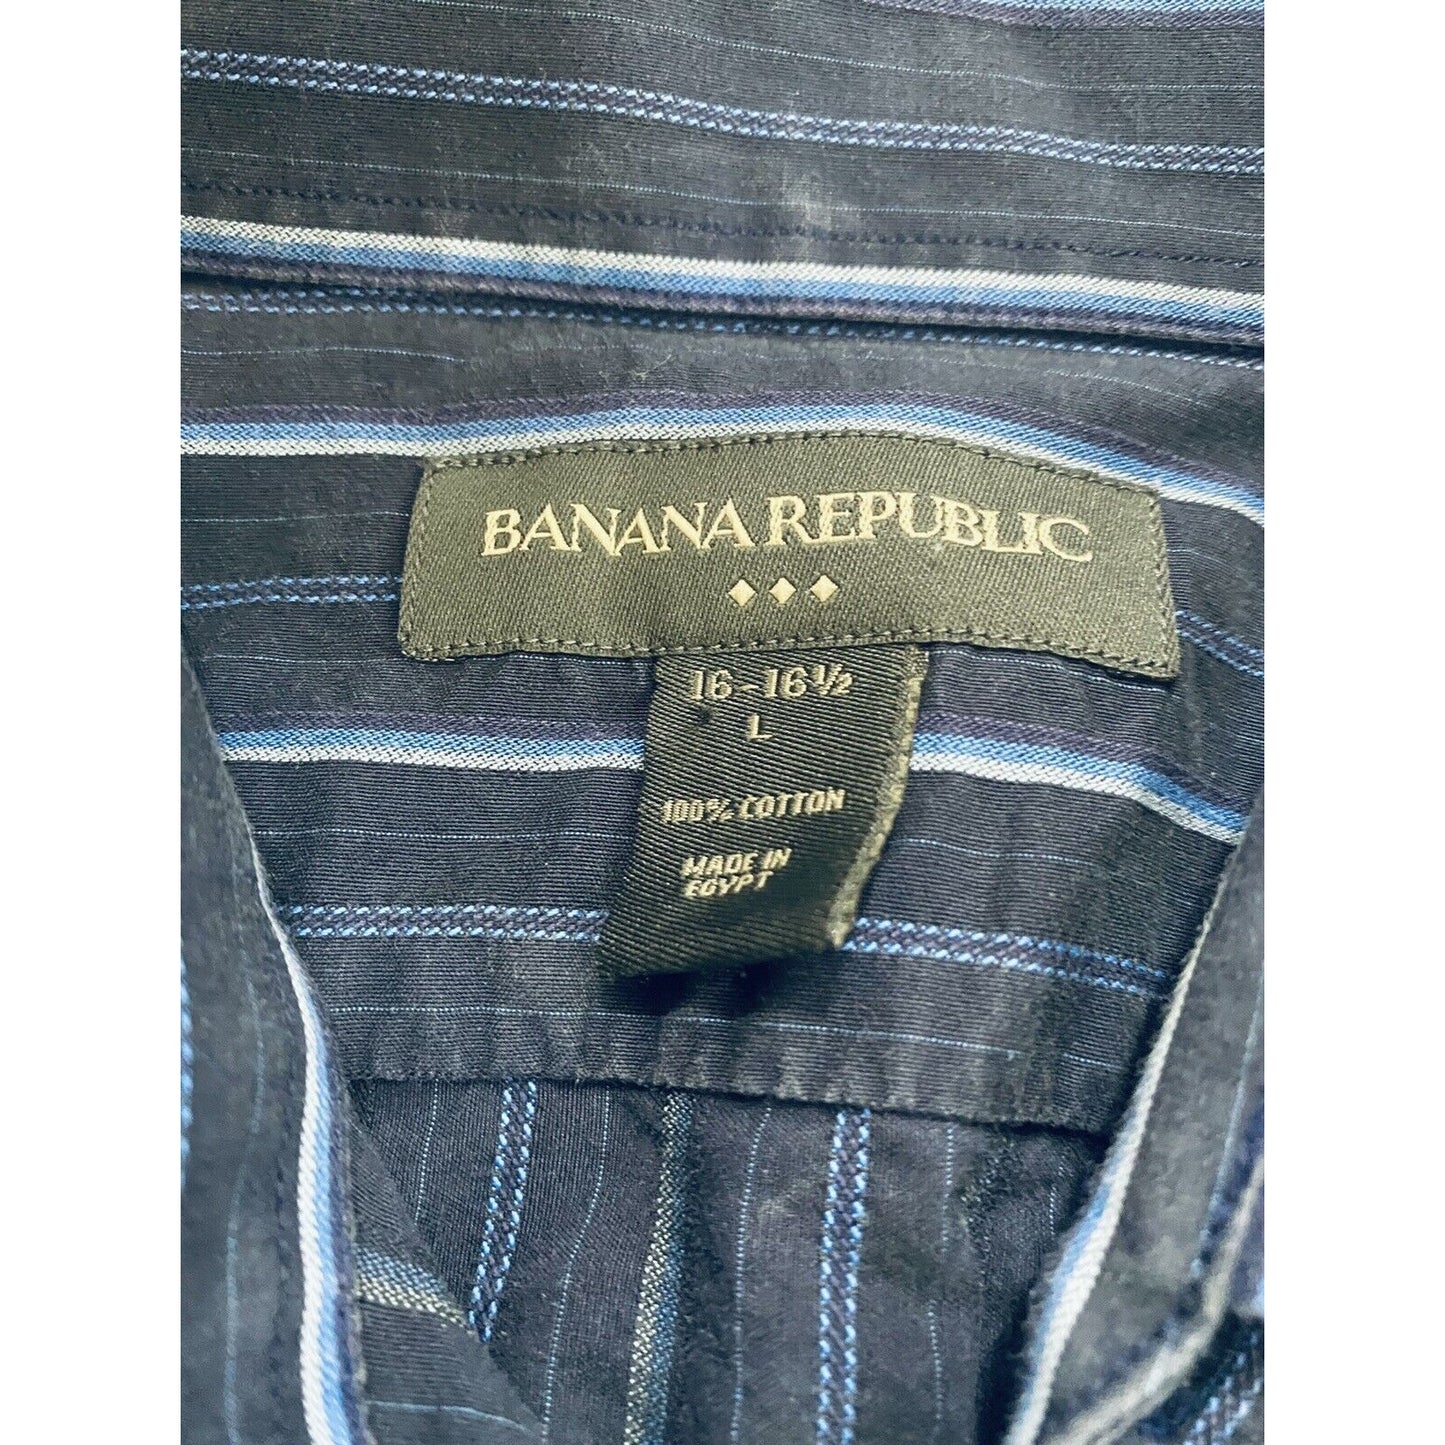 Banana Republic Navy Blue Striped Cotton Men’s Large Button-down Long Sleeves